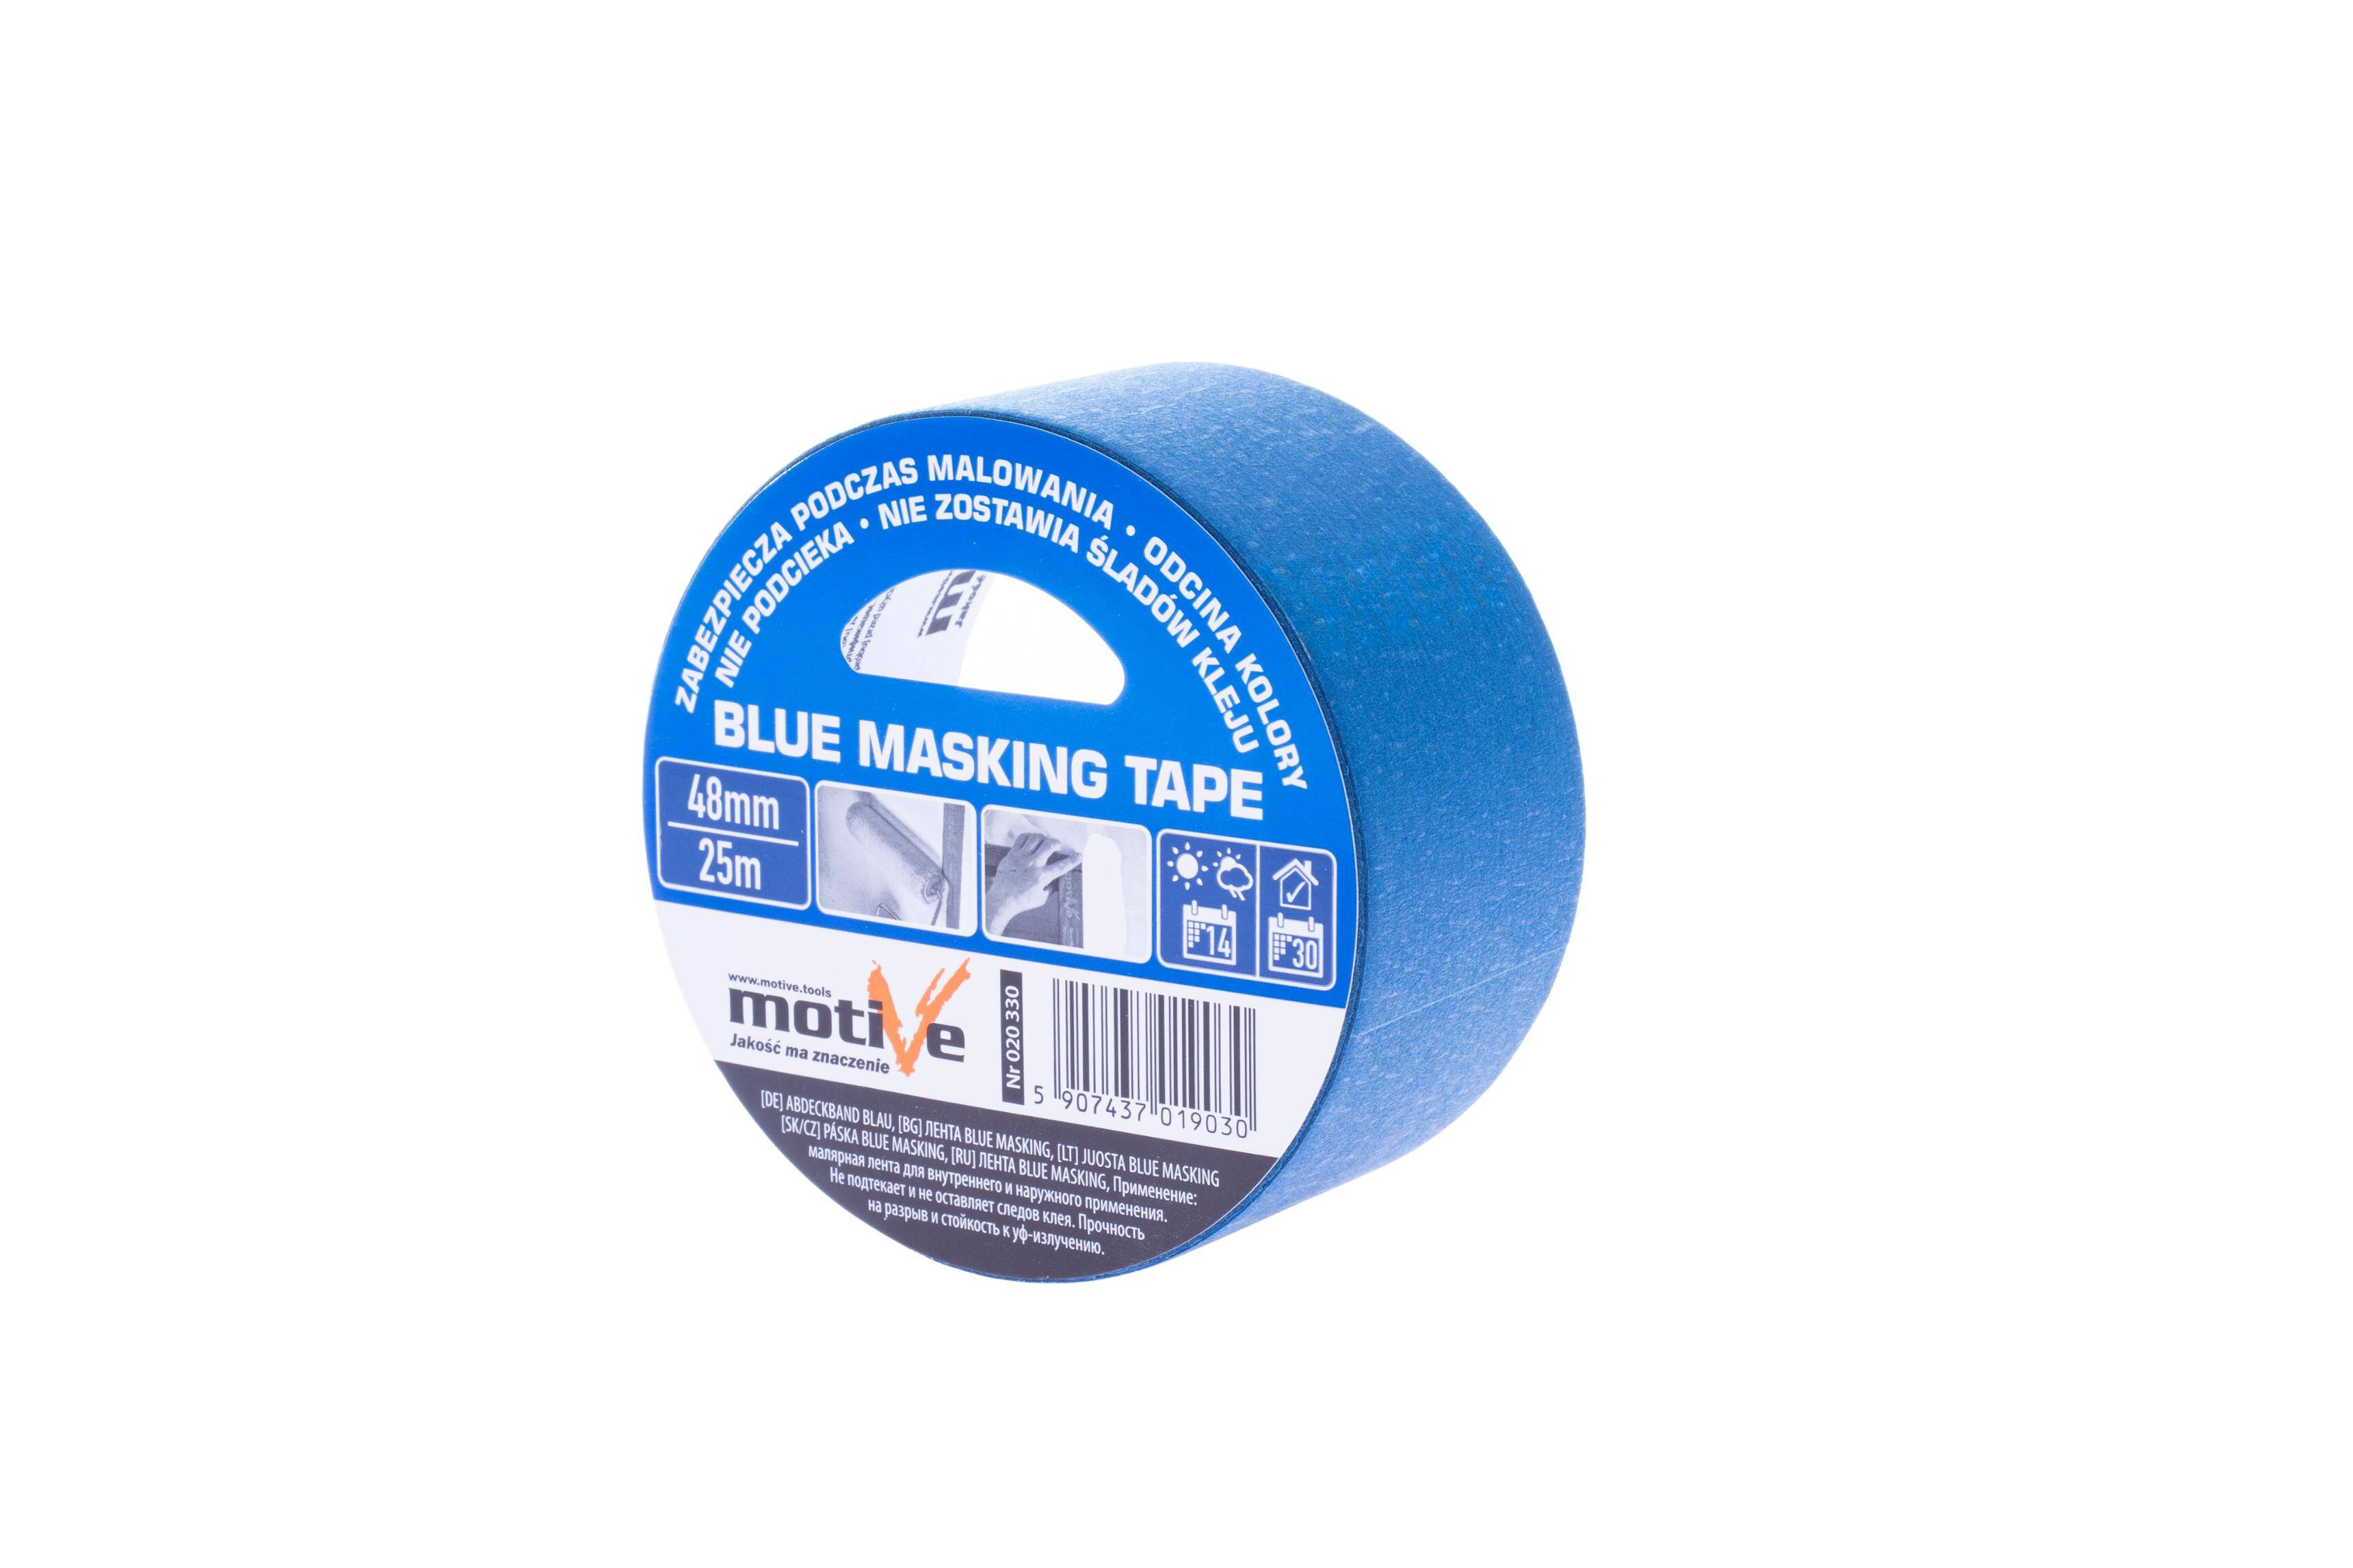 BLUE MASKING TAPE 48mm/25m MOTIVE